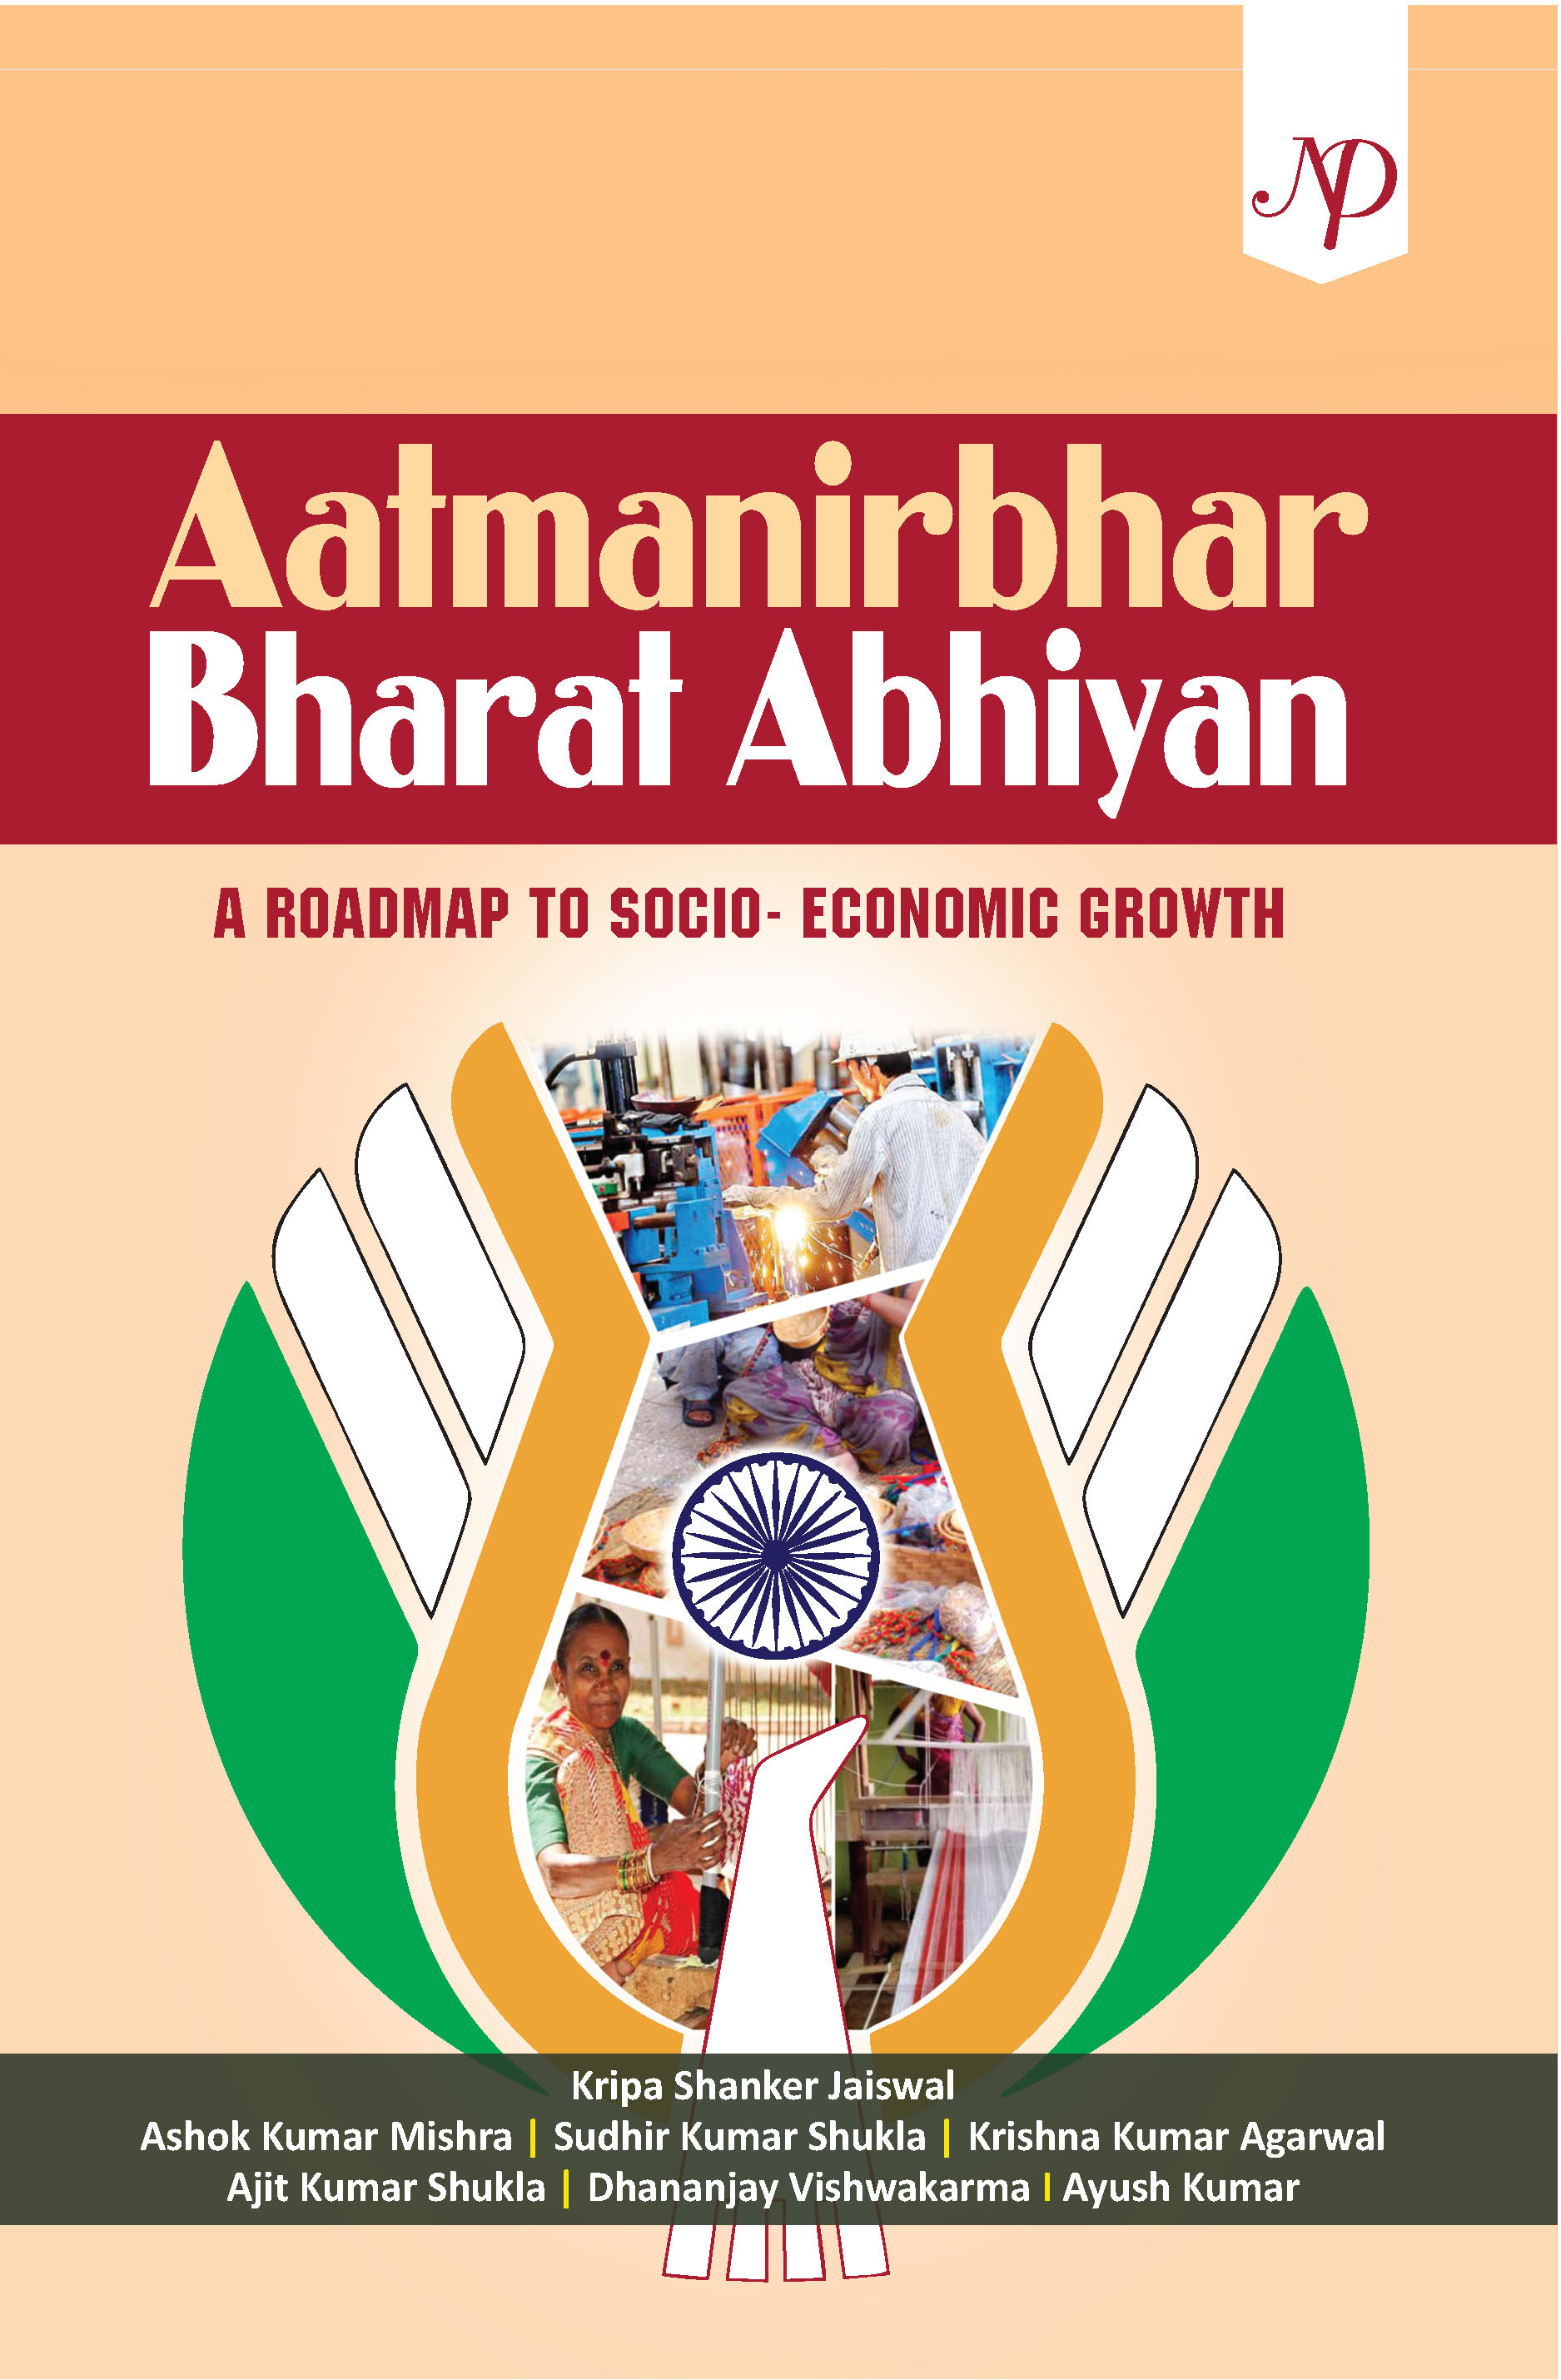 Aatmanirbhar Bharat Abhiyan Cover By Ayush.jpg